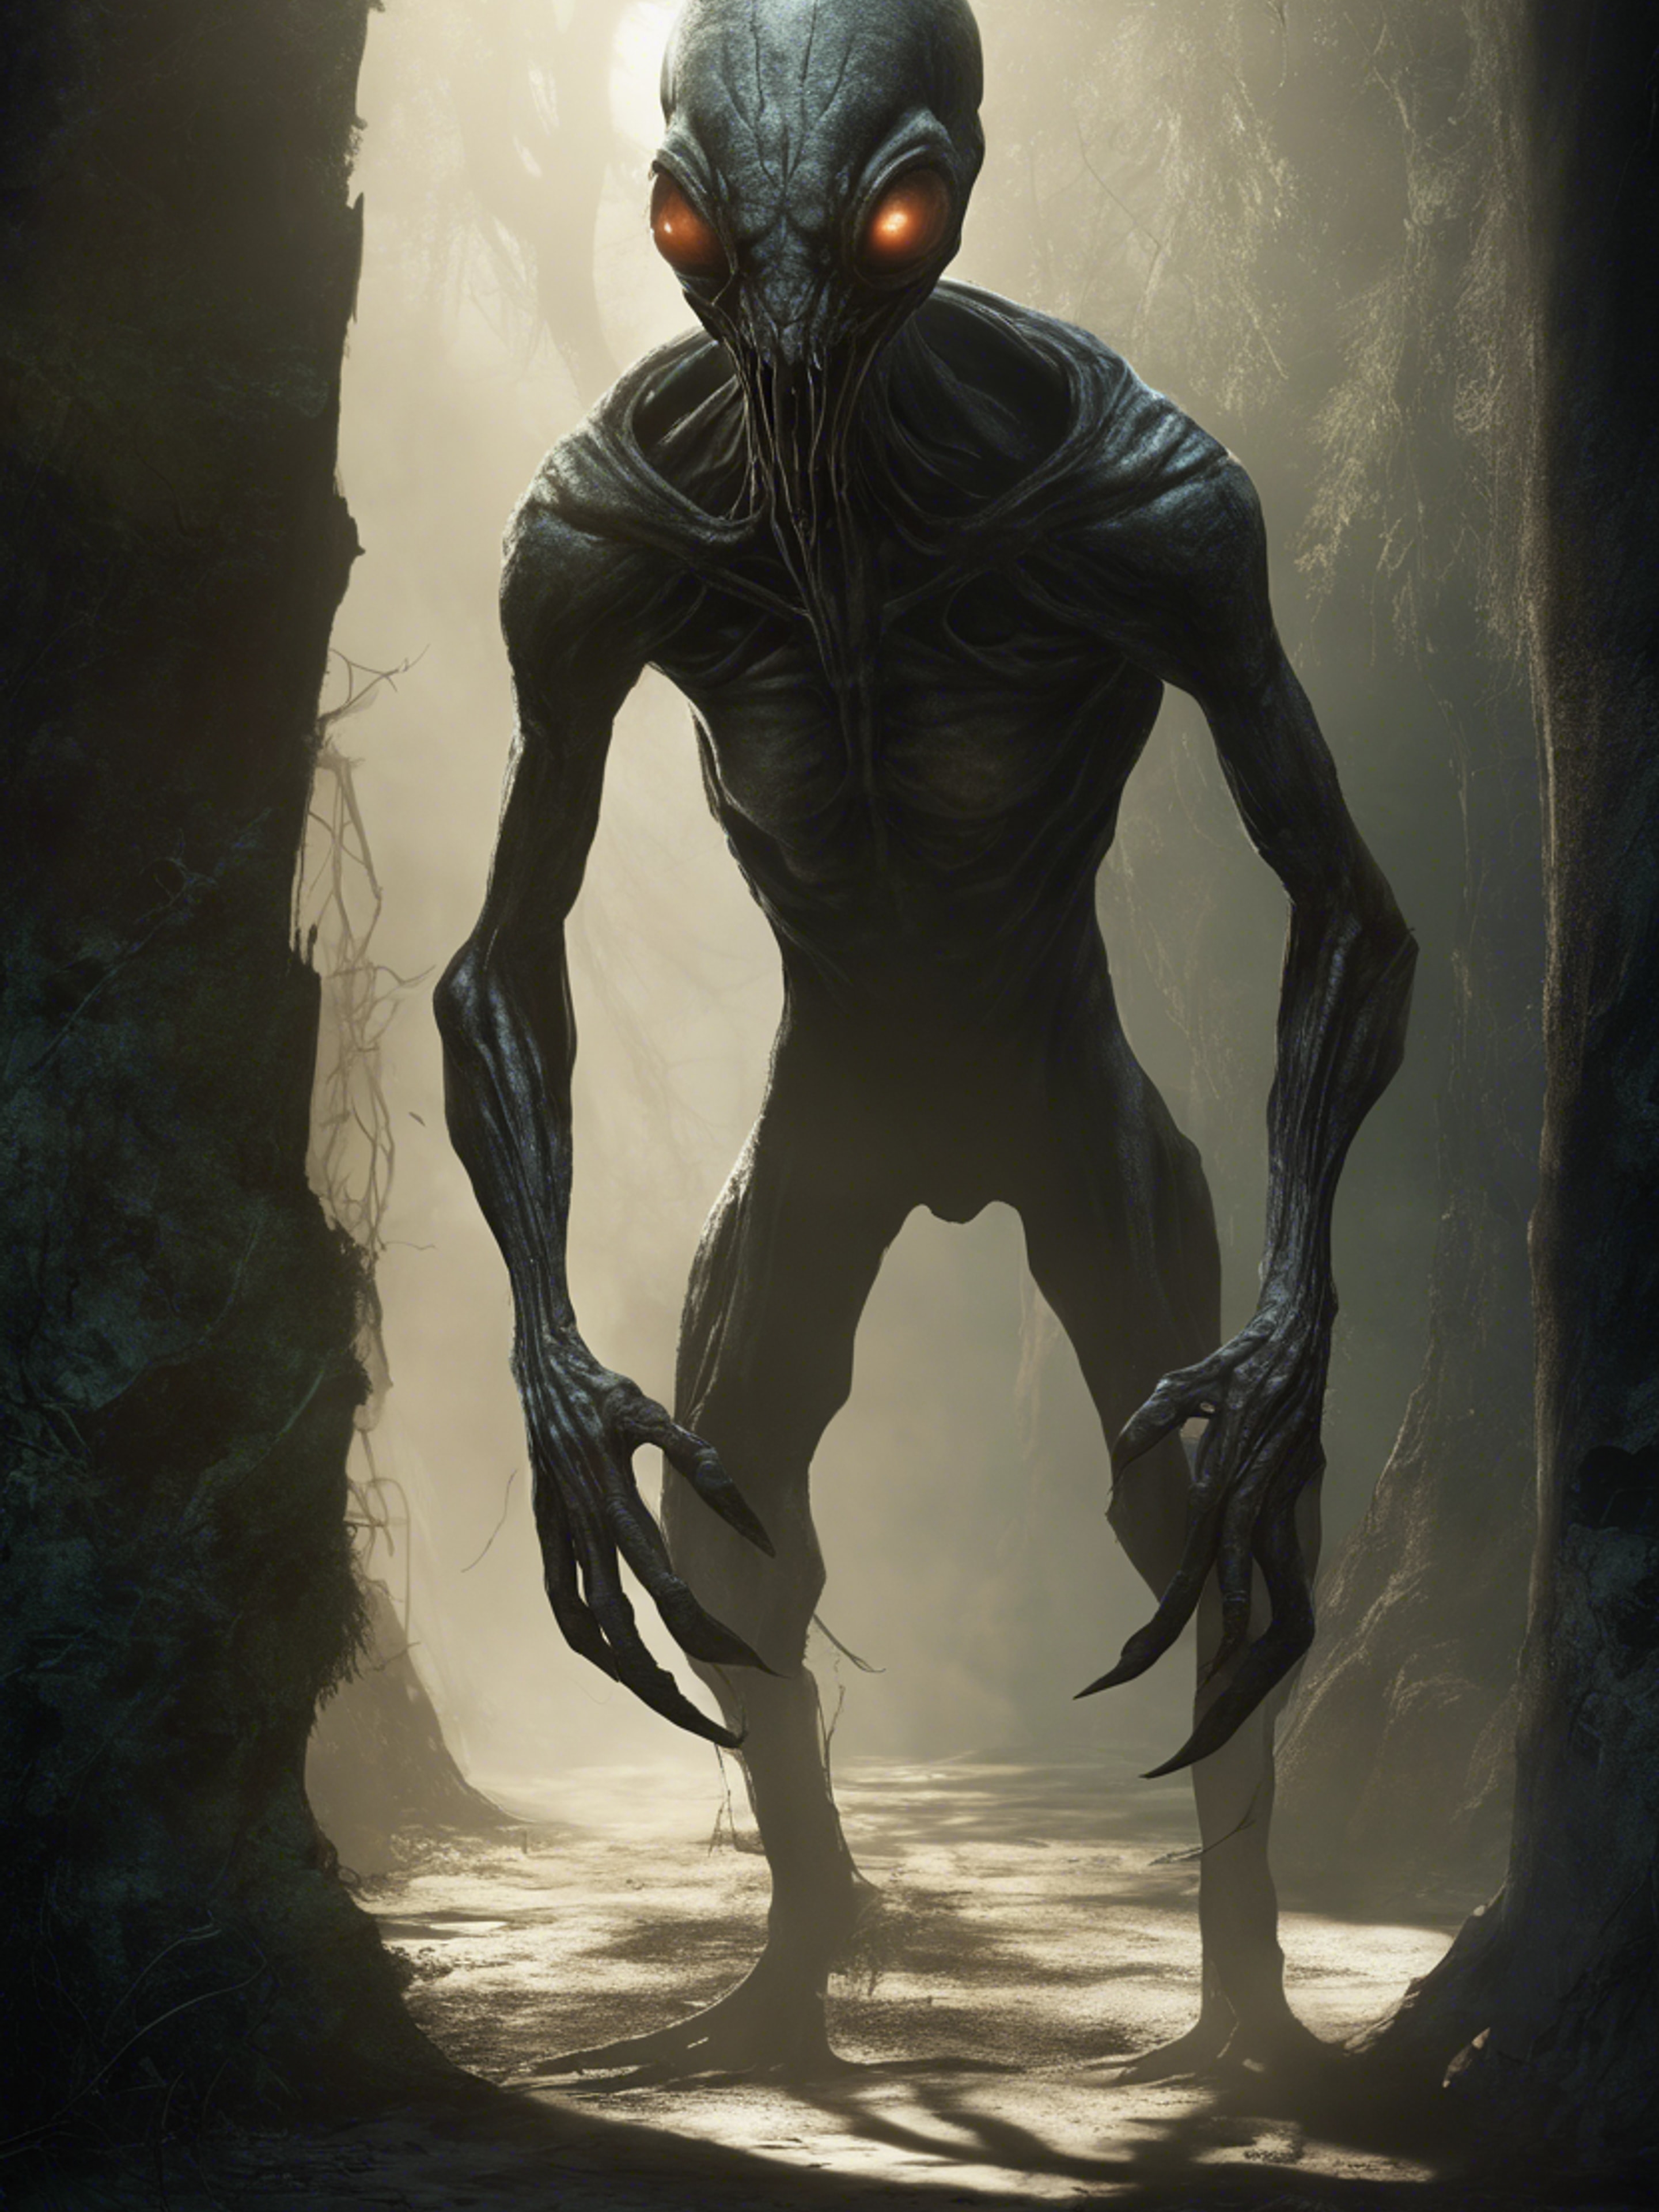 An eerie shot of an alien creature from a sci-fi horror game, emerging from the shadows. Wallpaper[70e4d6a77d4241508cba]